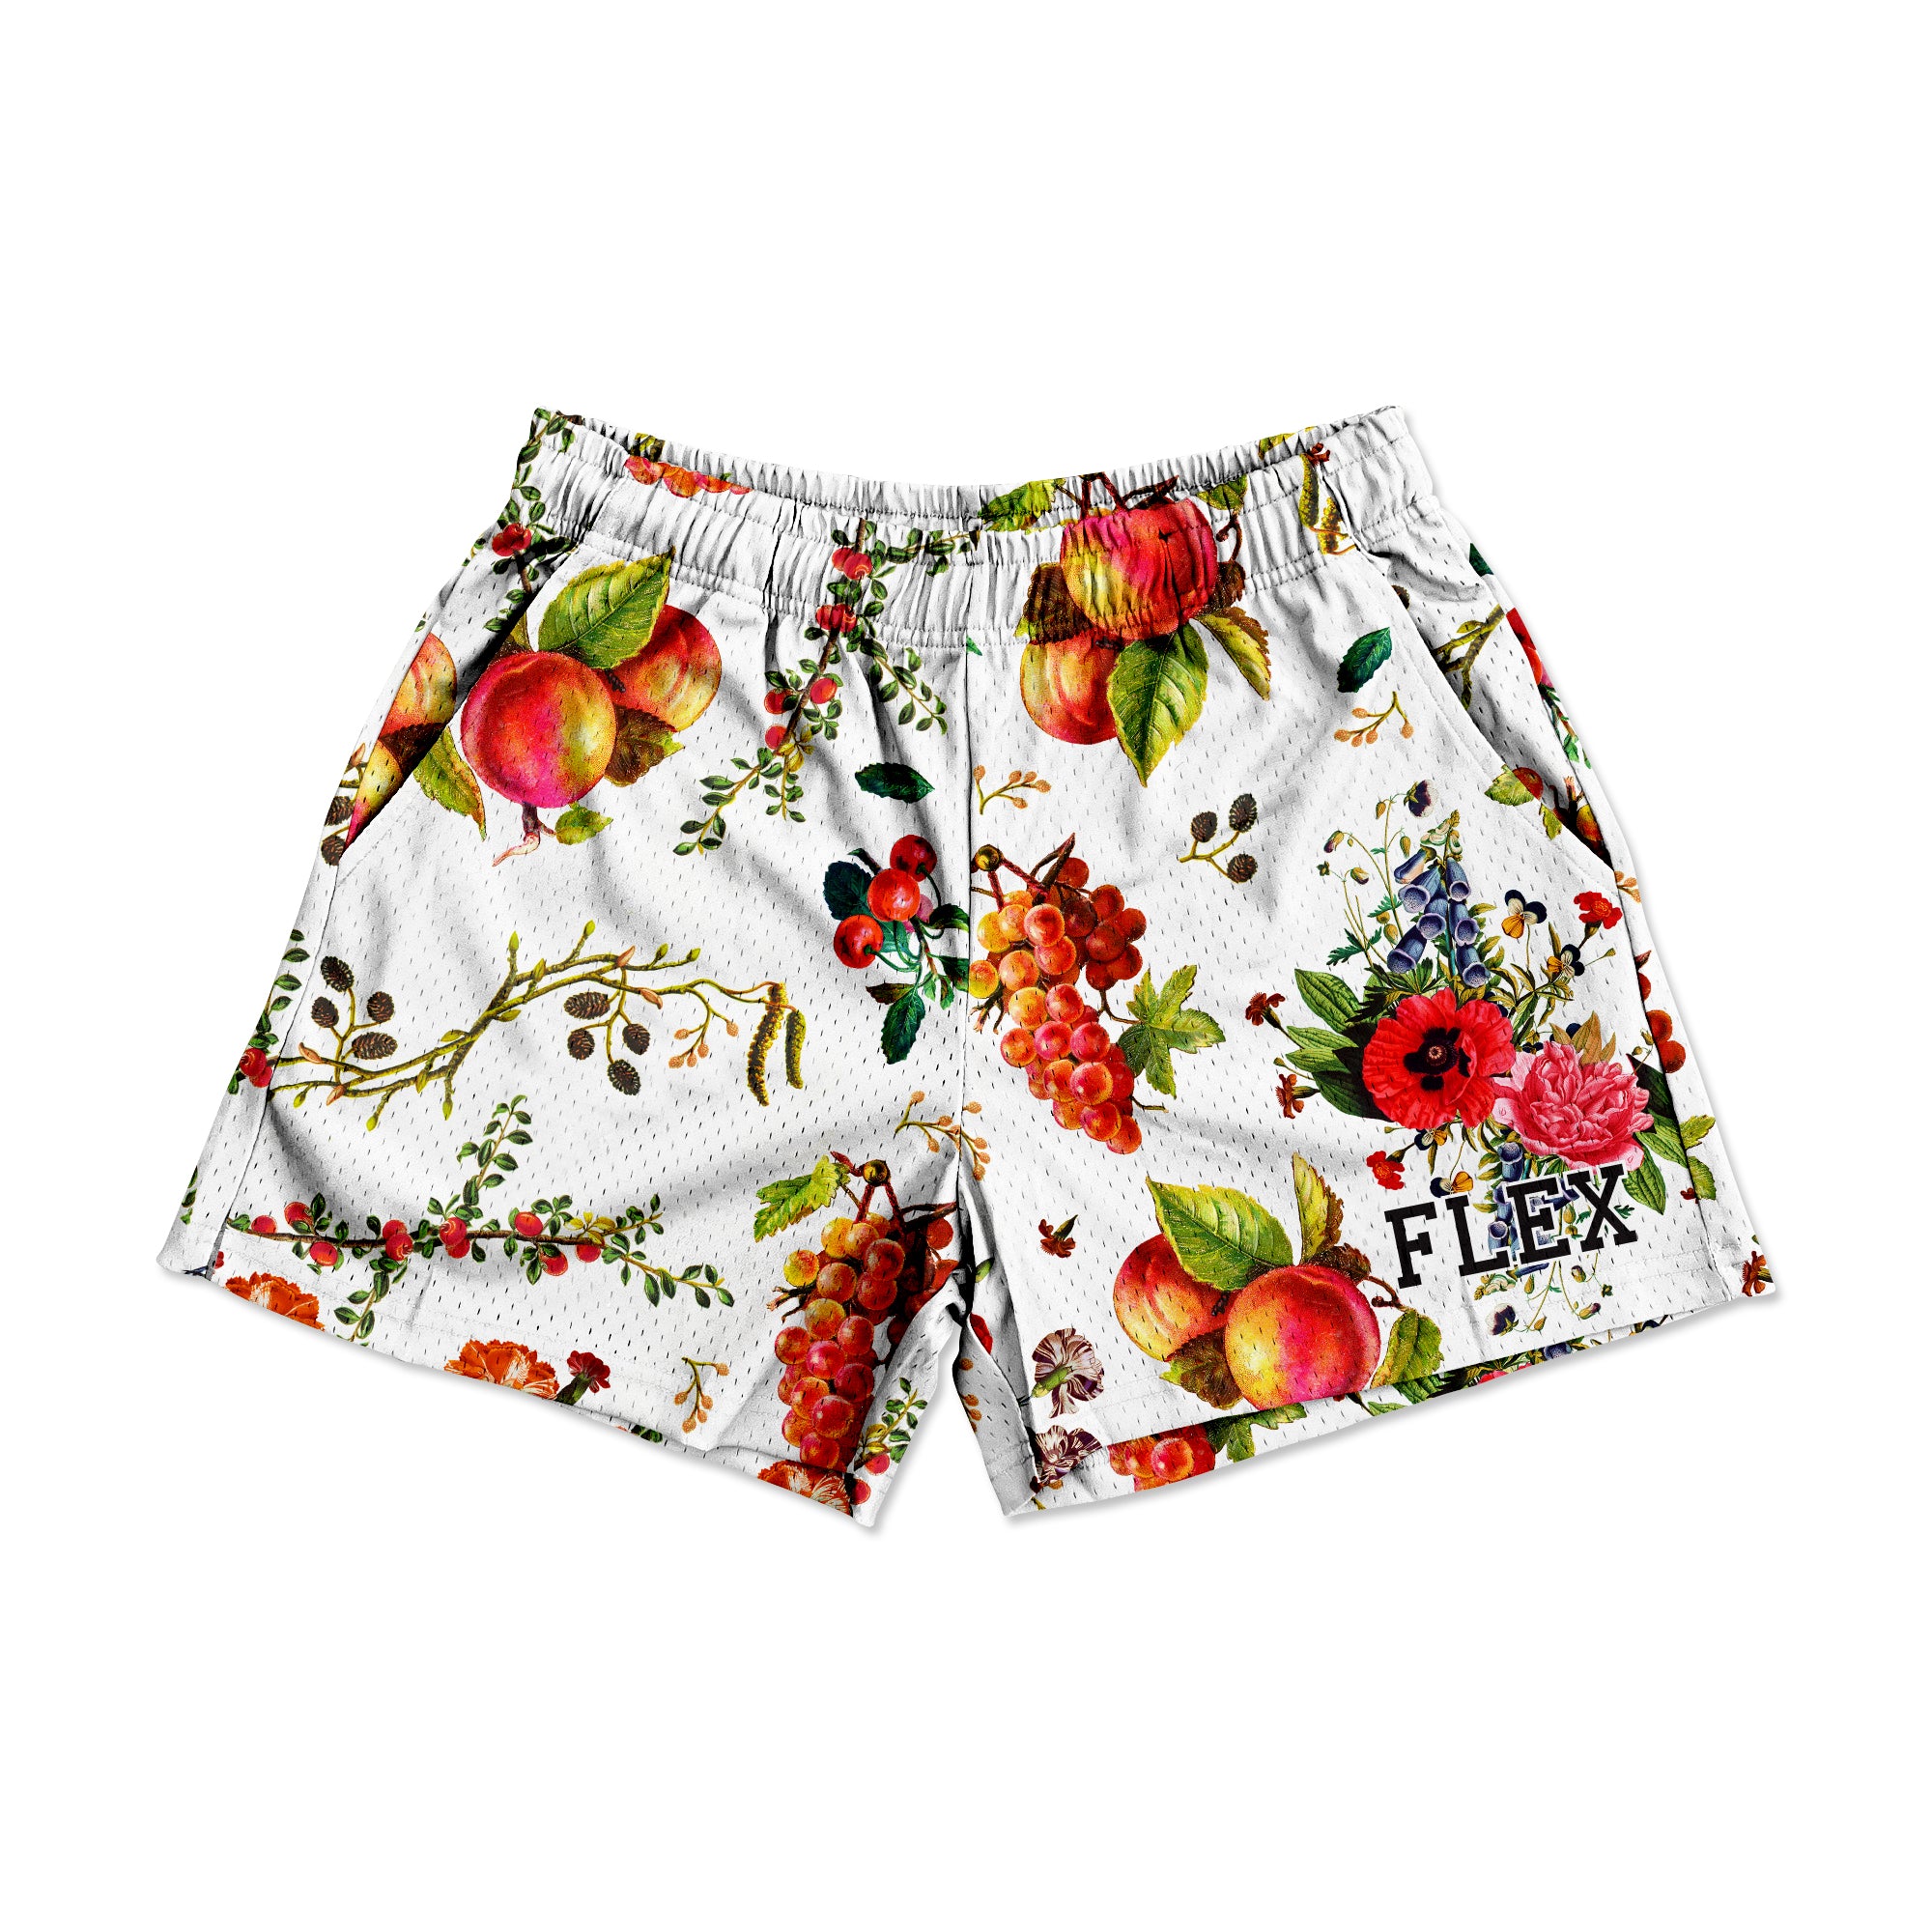 Mesh Flex Shorts 5 - Gymrats (Preorder) – Flexliving